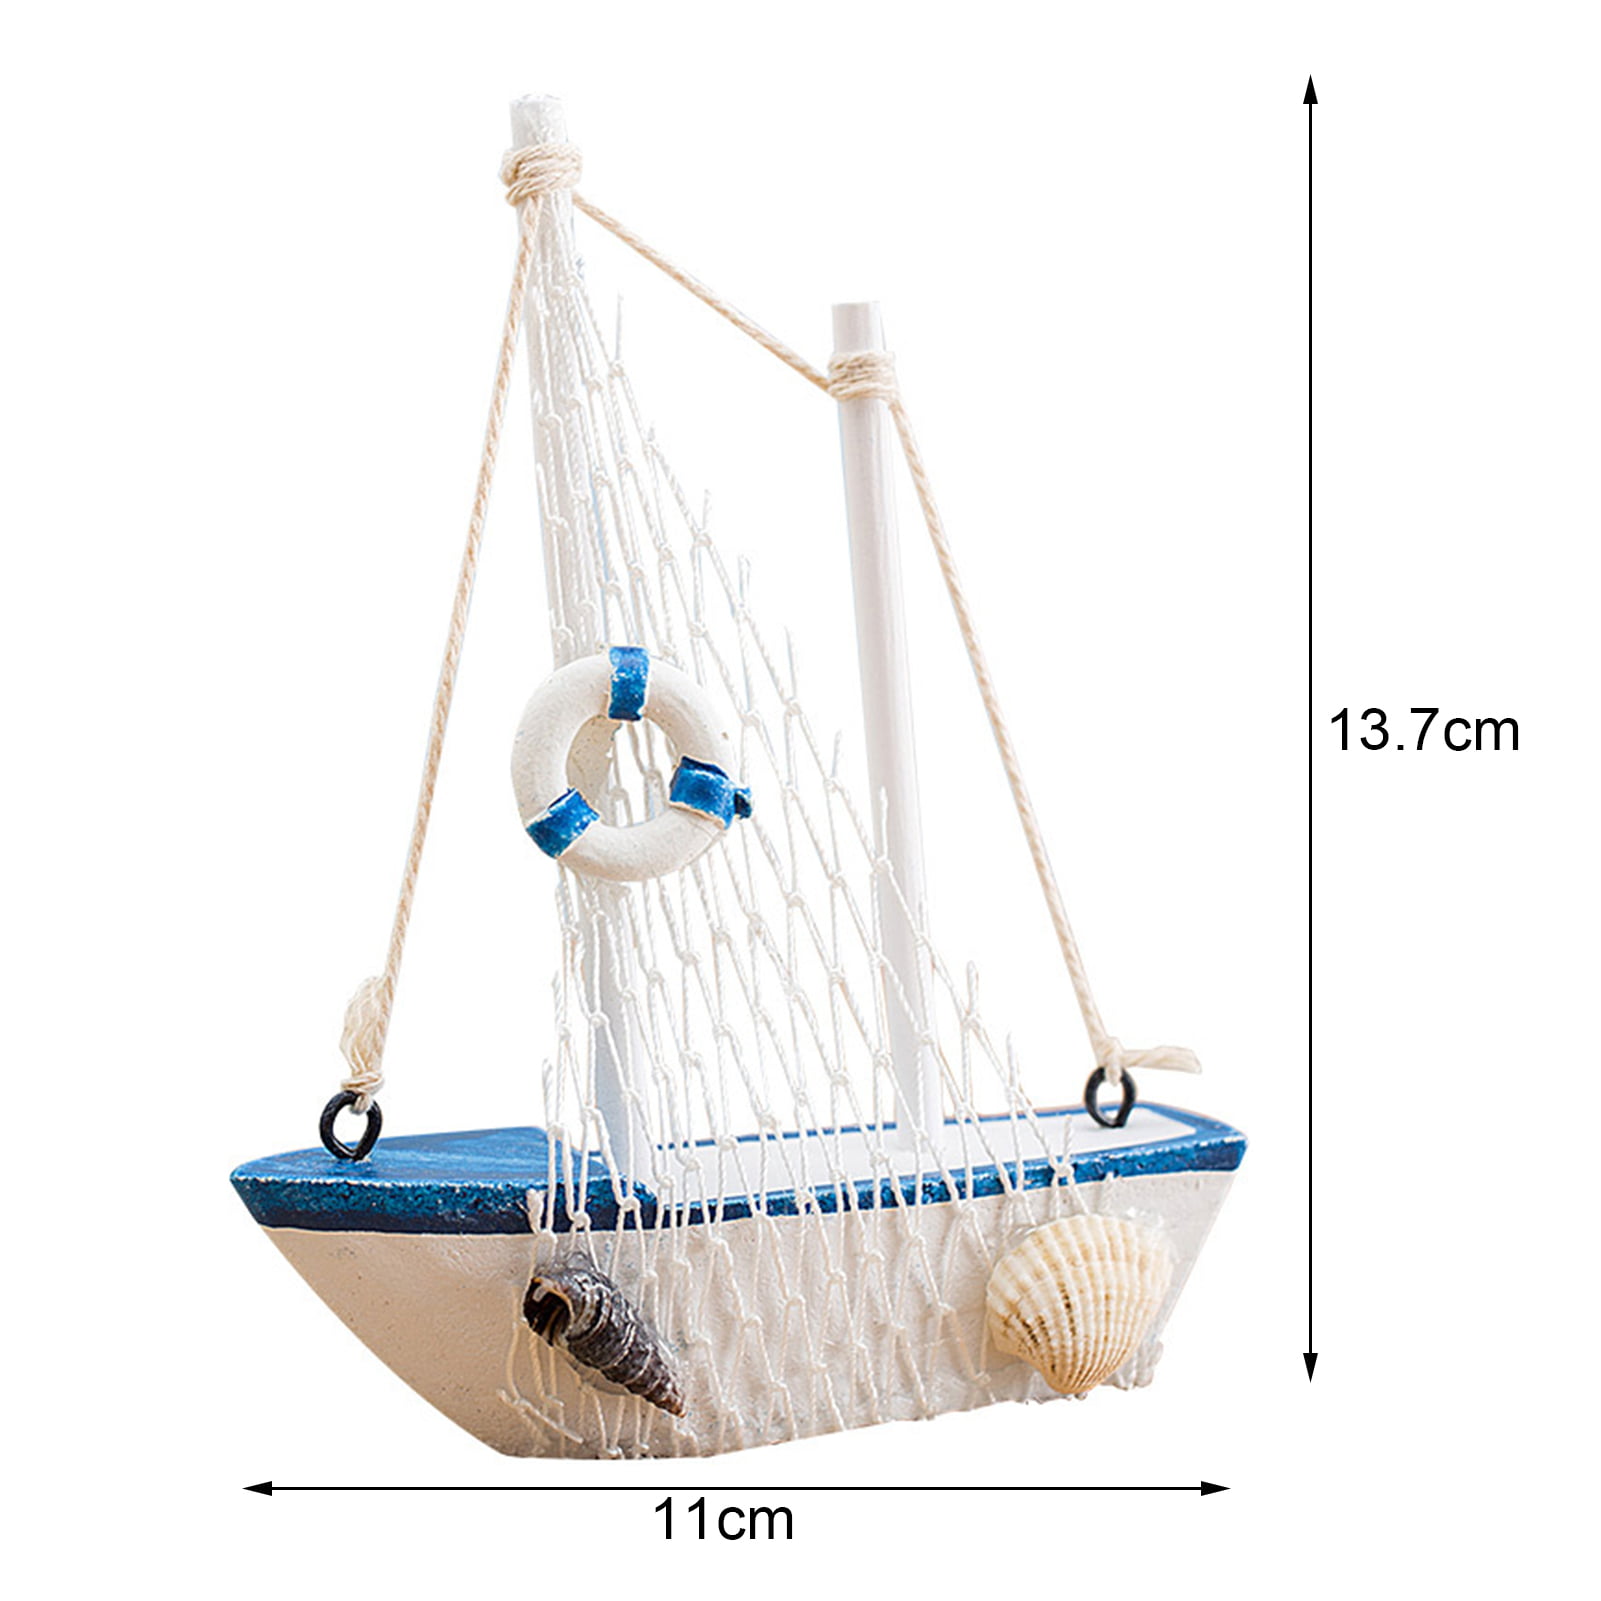 Walbest Ocean Theme Ornament Mini Sailboat Model, Wooden Miniature